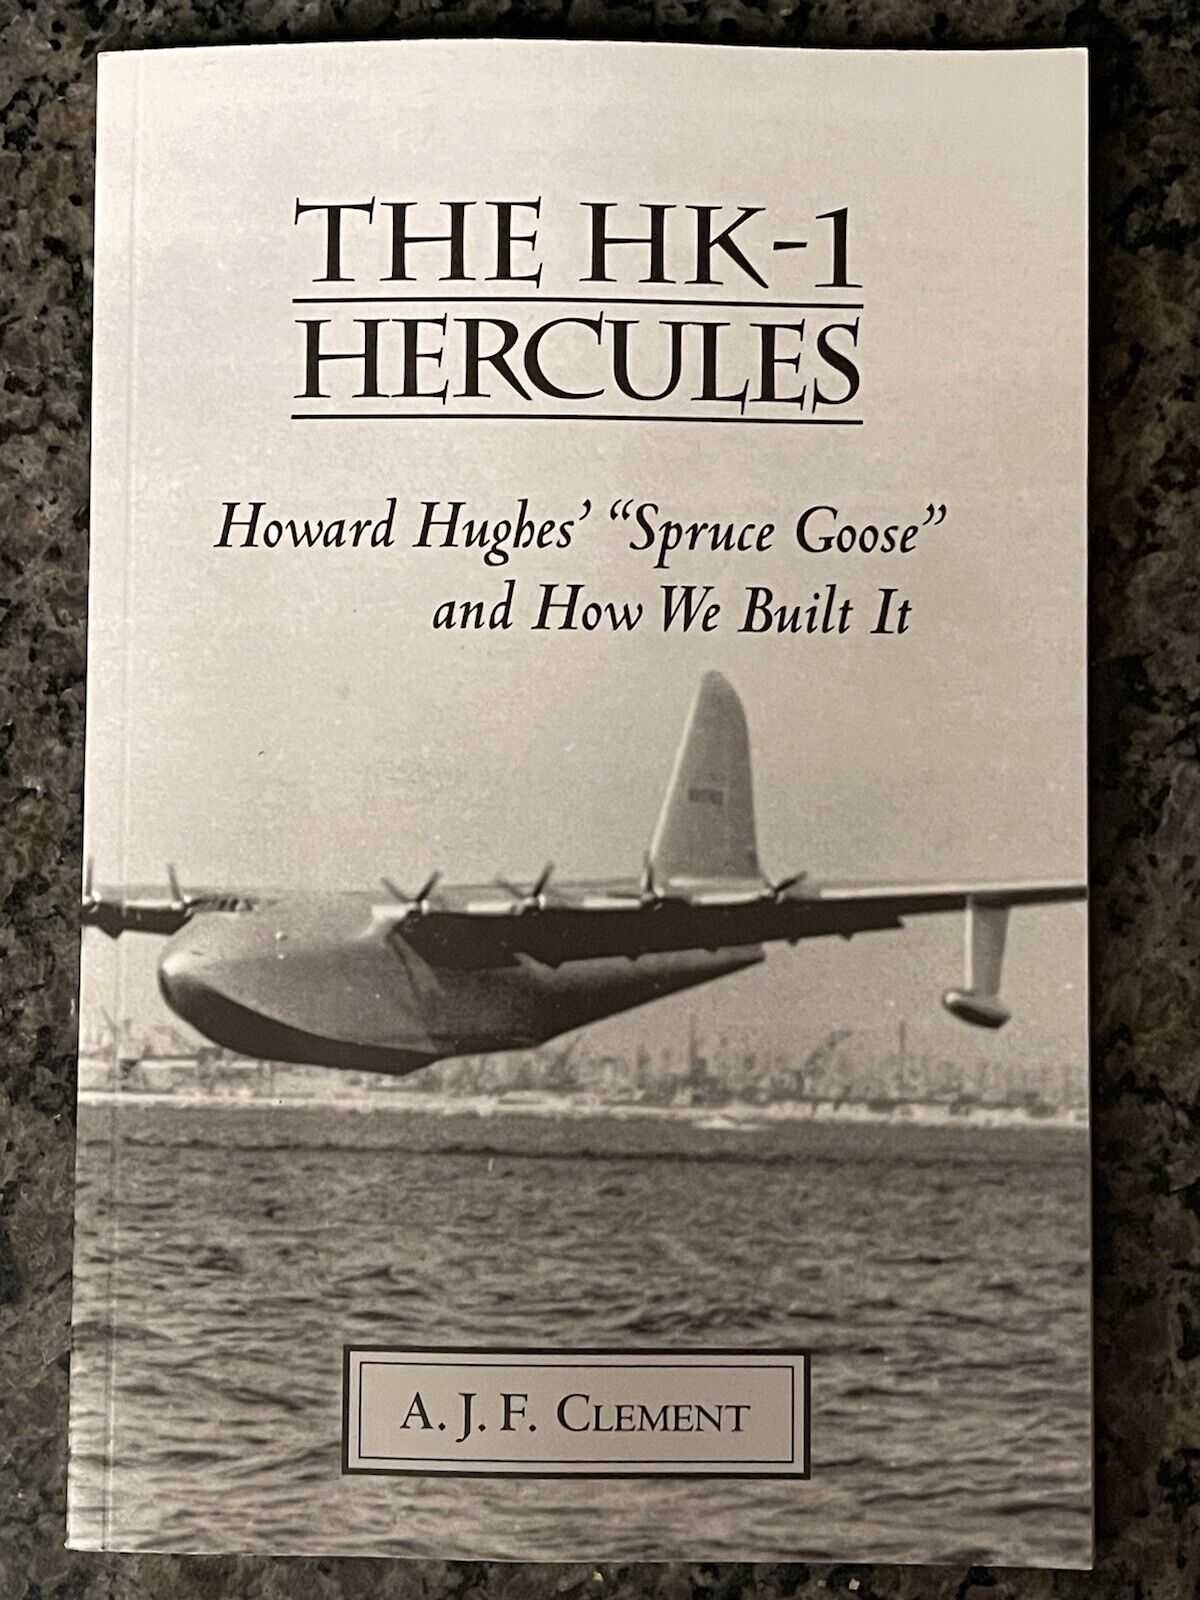 The HK-1 Hercules  Howard Hughes “Spruce Goose And how We built It”